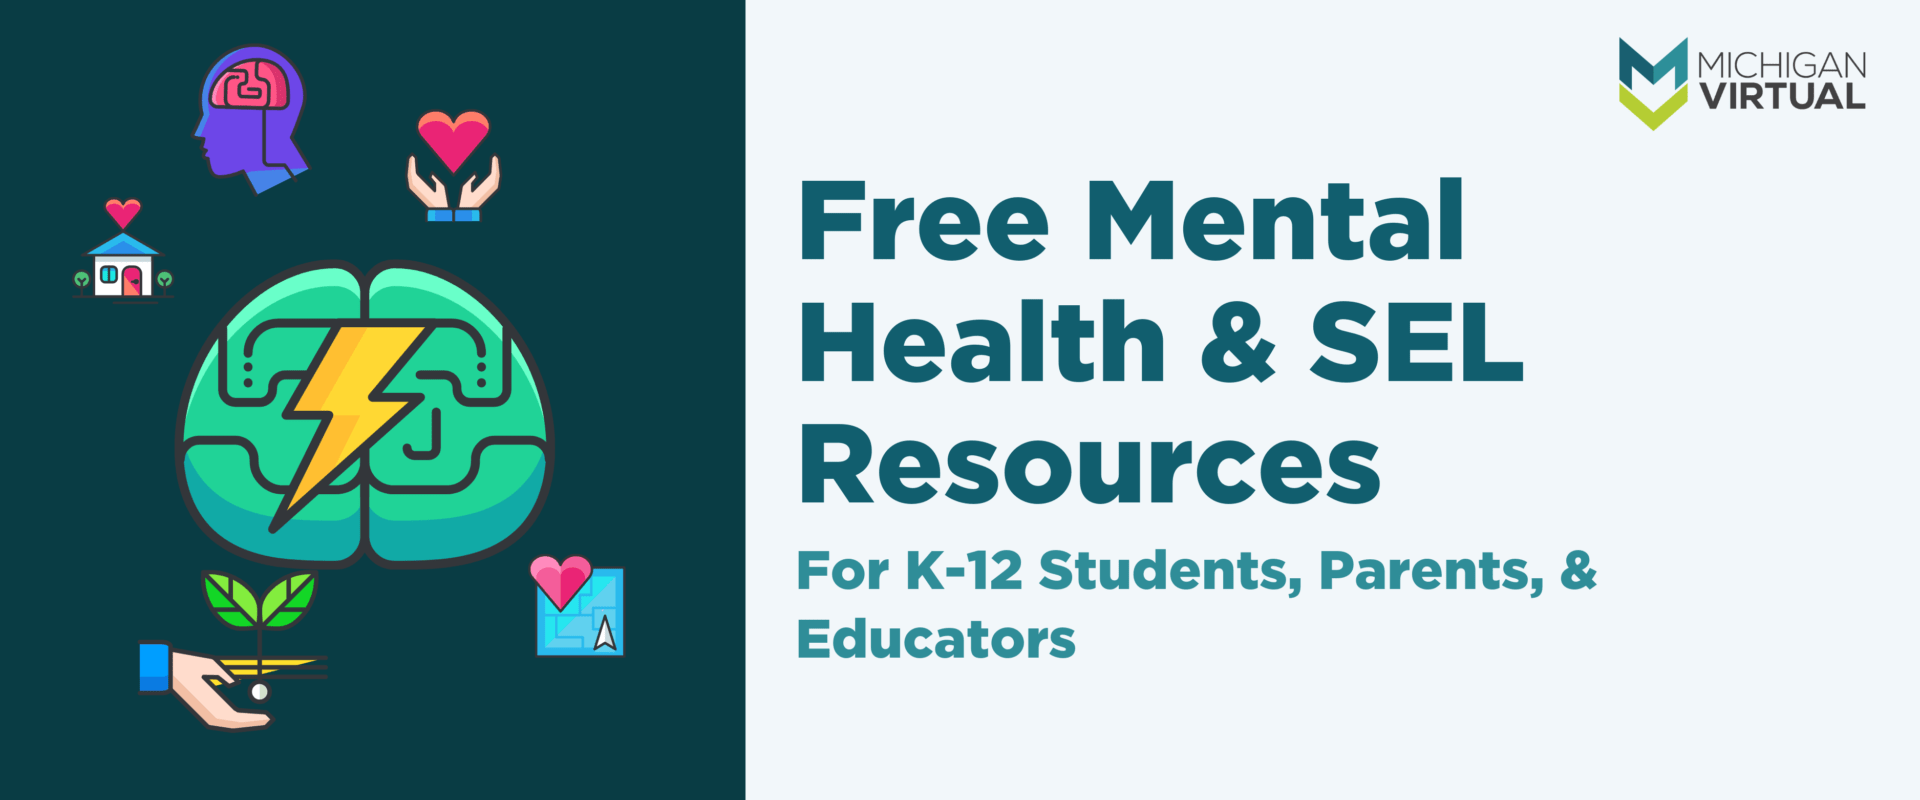 Free Mental Health & SEL Resources For K-12 Students, Parents & Educators